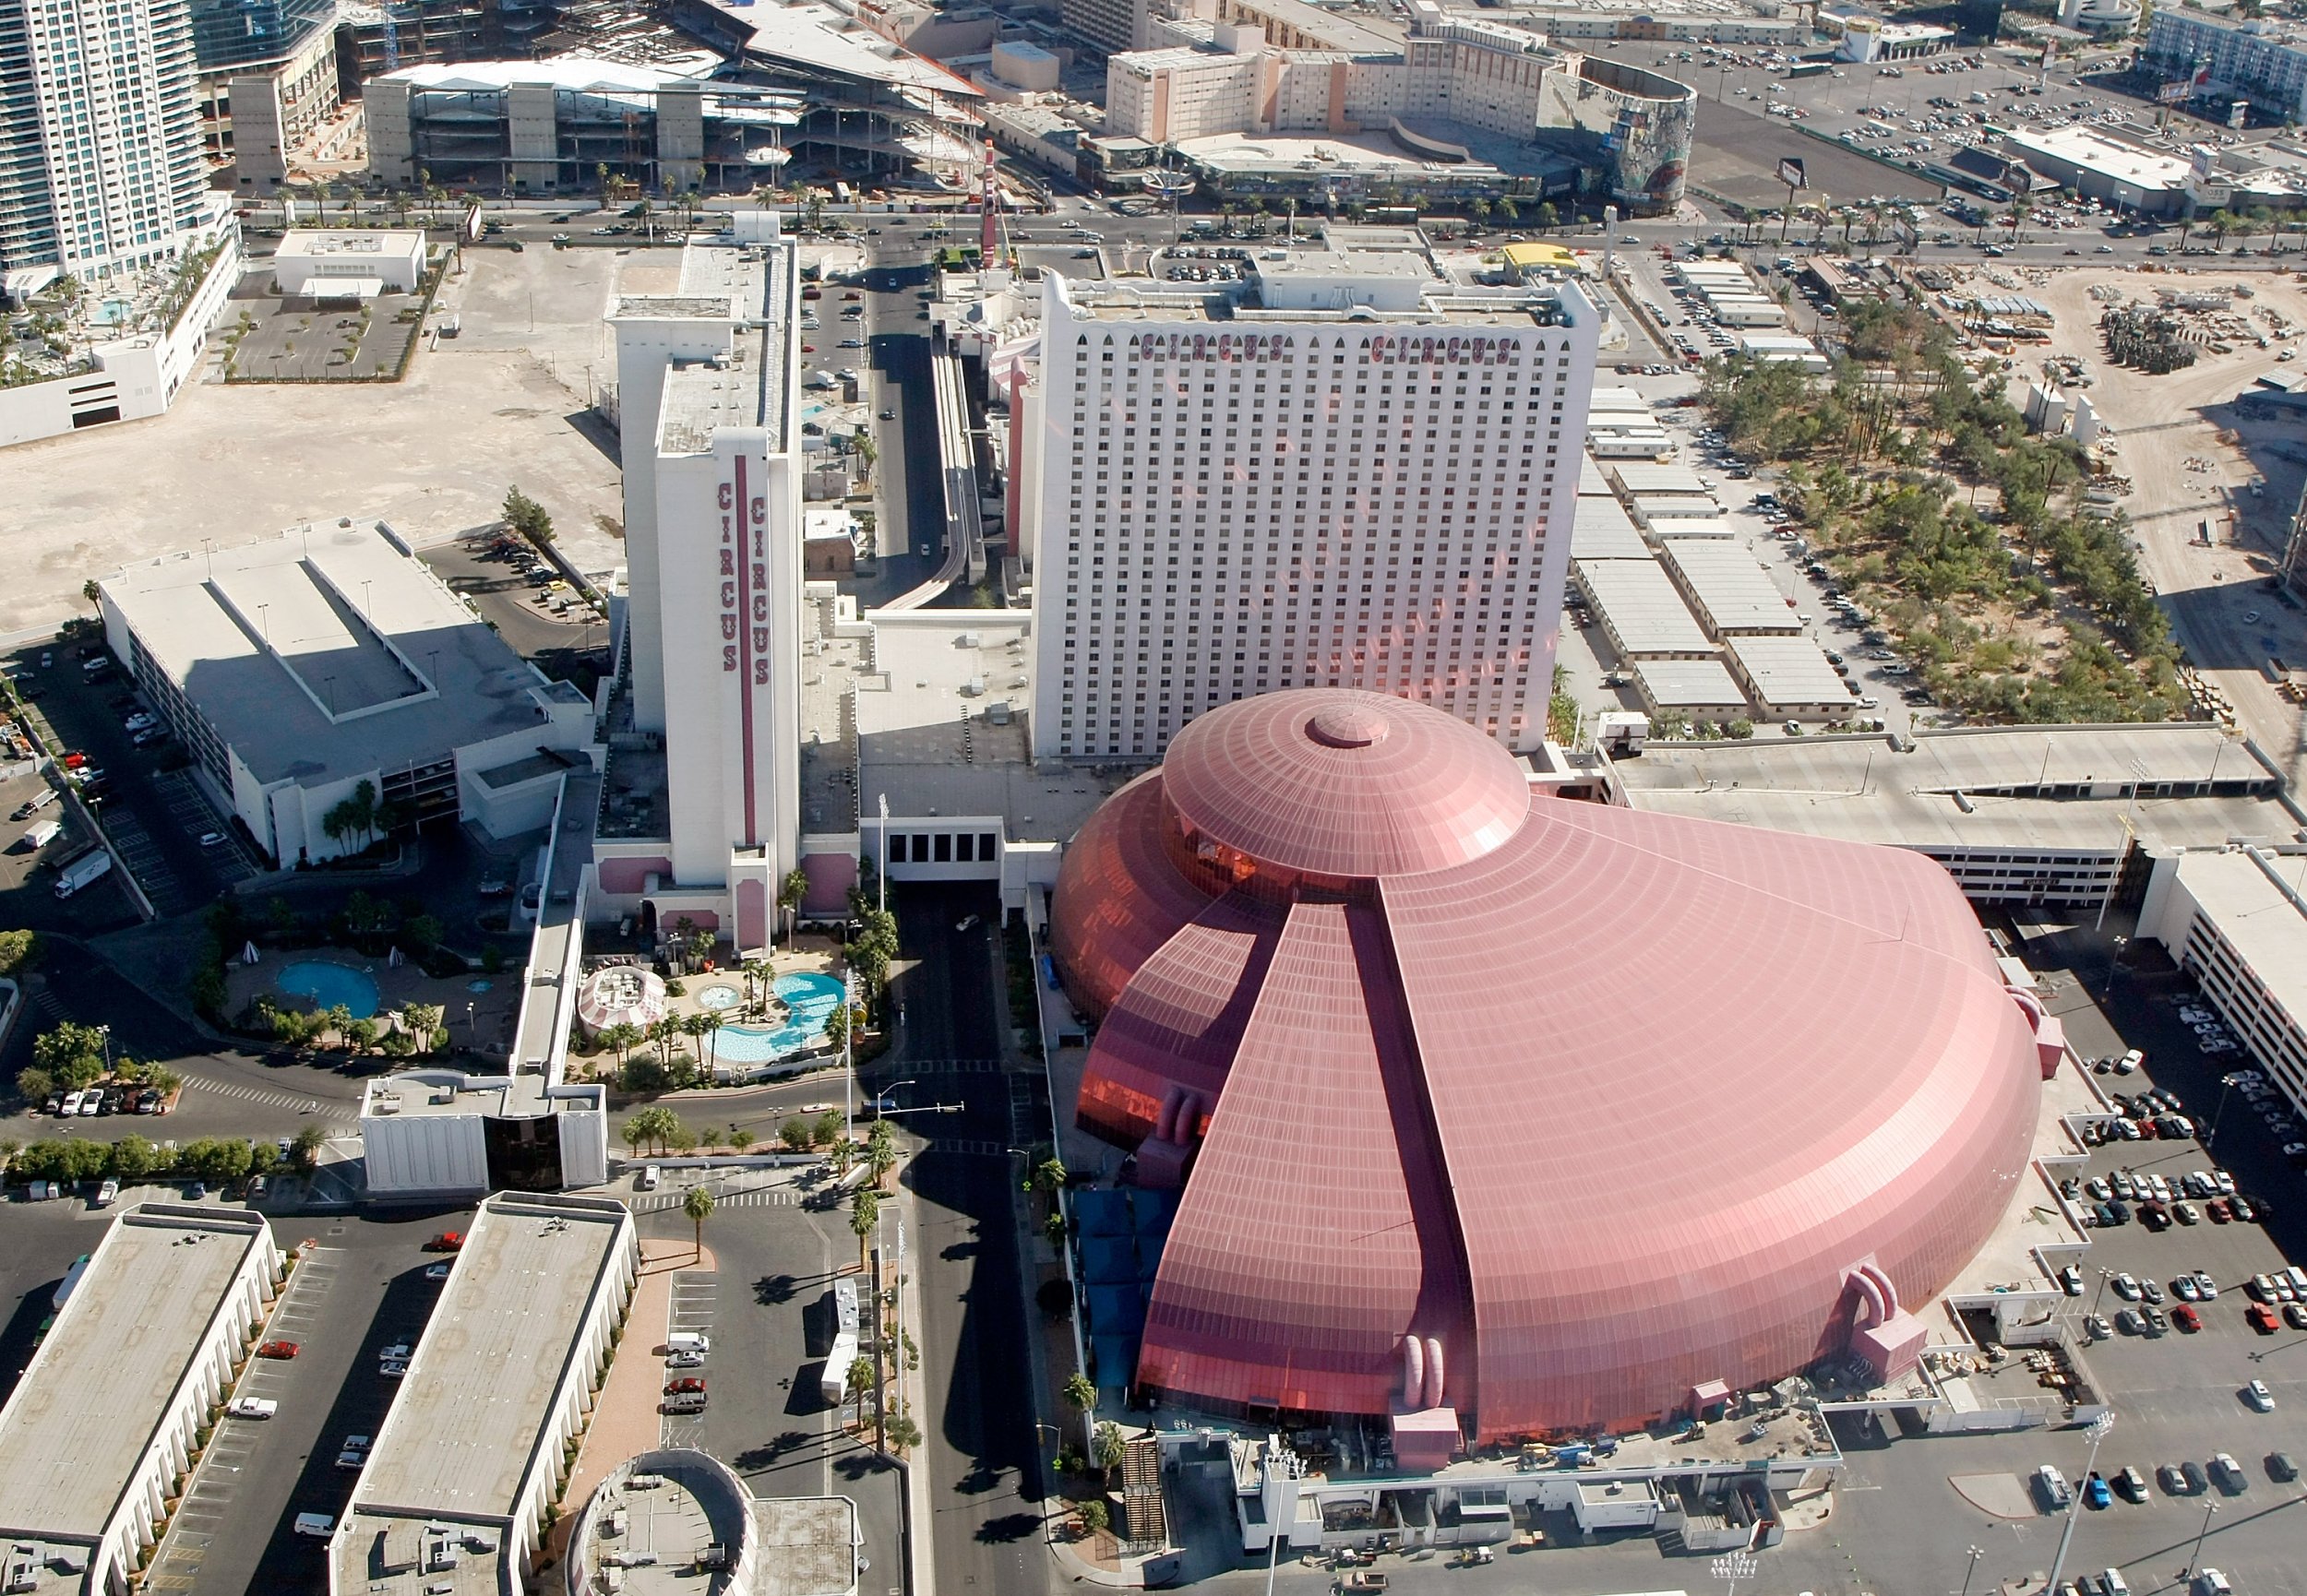 Hotels near The Adventuredome Indoor Theme Park, Las Vegas